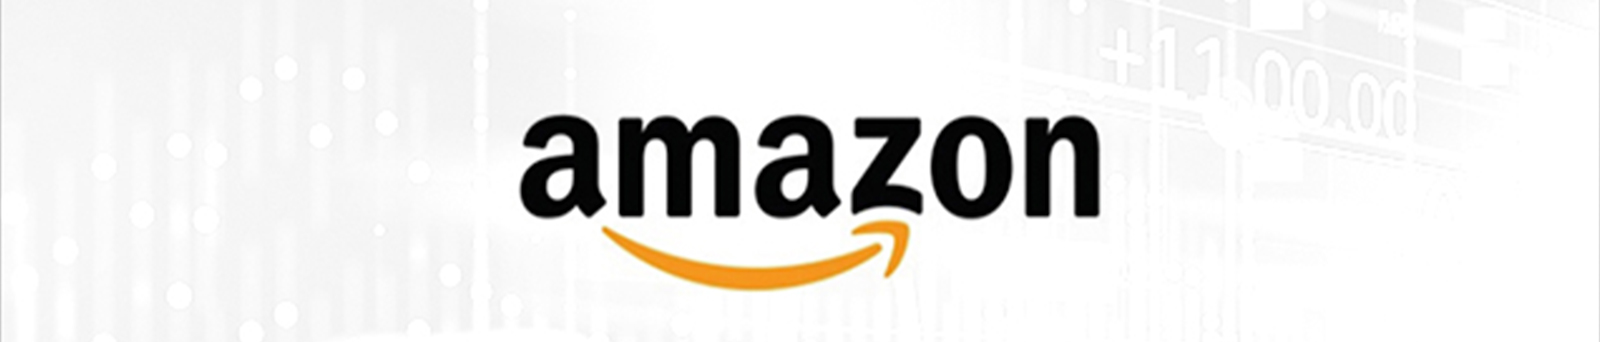 Amazon (NASDAQ: AMZN) Company Profile